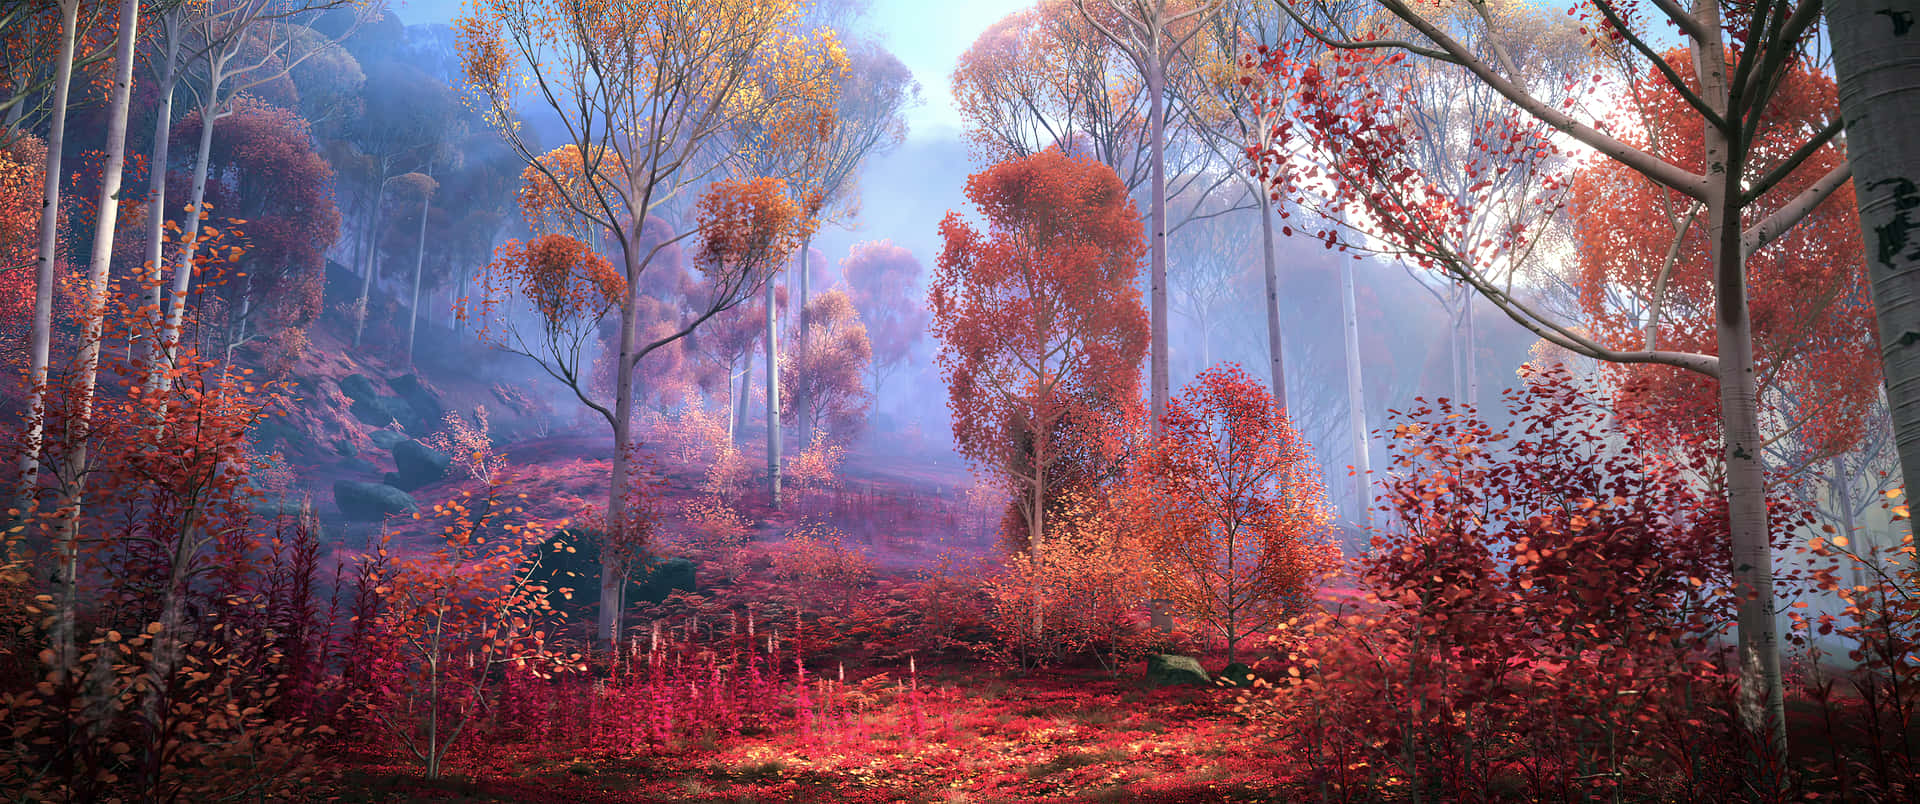 Autumn Season Magical Forest Wallpaper